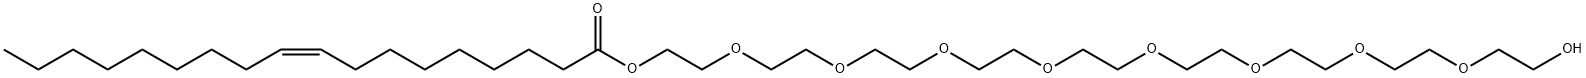 2-[2-[2-[2-[2-[2-[2-[2-(2-hydroxyethoxy)ethoxy]ethoxy]ethoxy]ethoxy]et hoxy]ethoxy]ethoxy]ethyl (Z)-octadec-9-enoate|